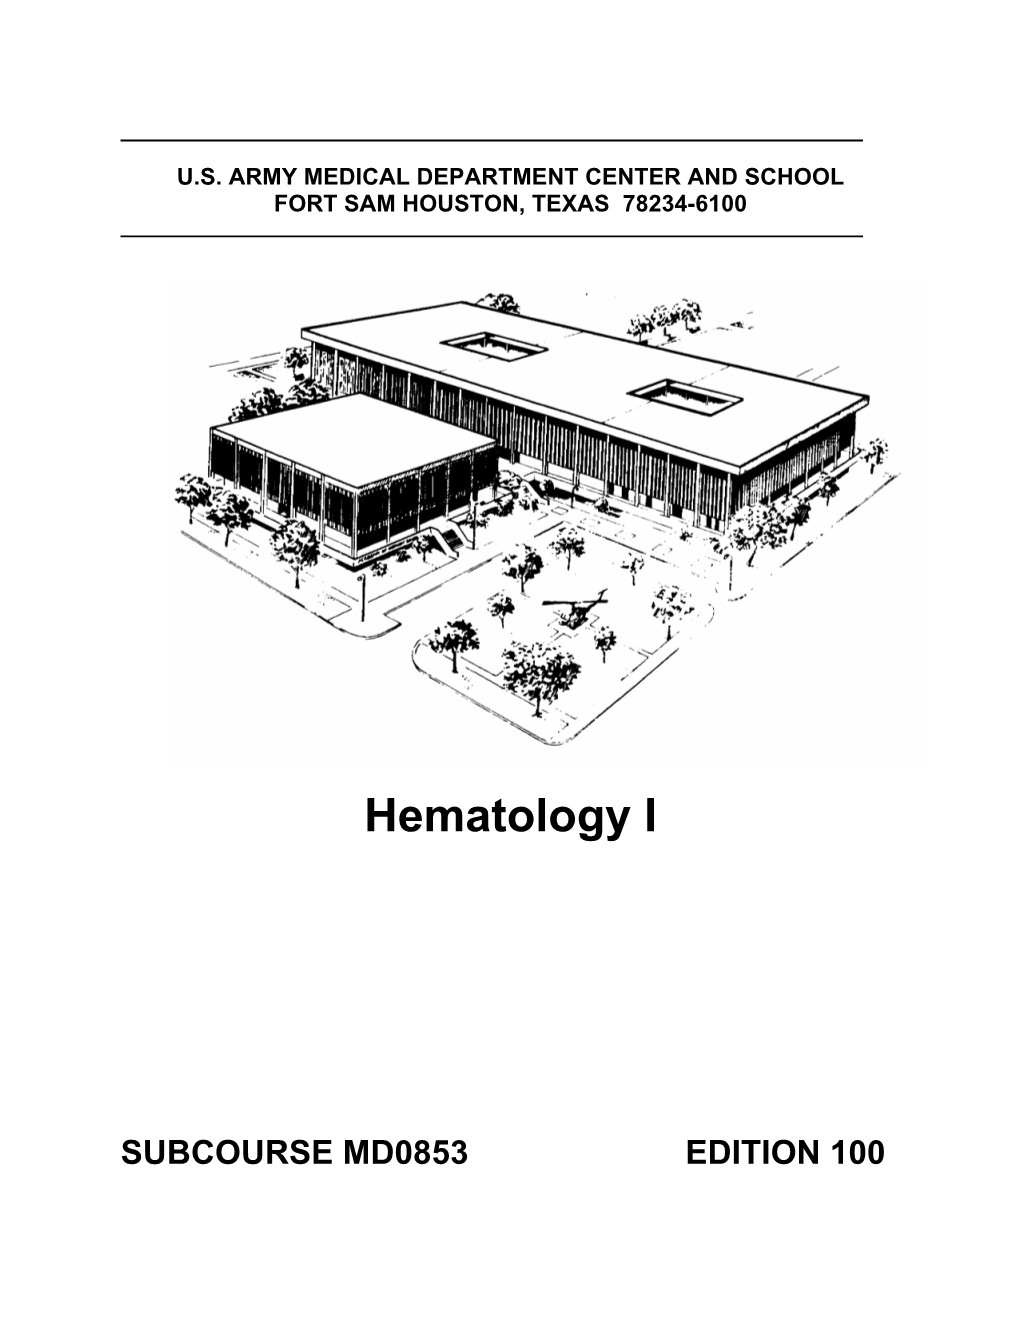 Hematology I